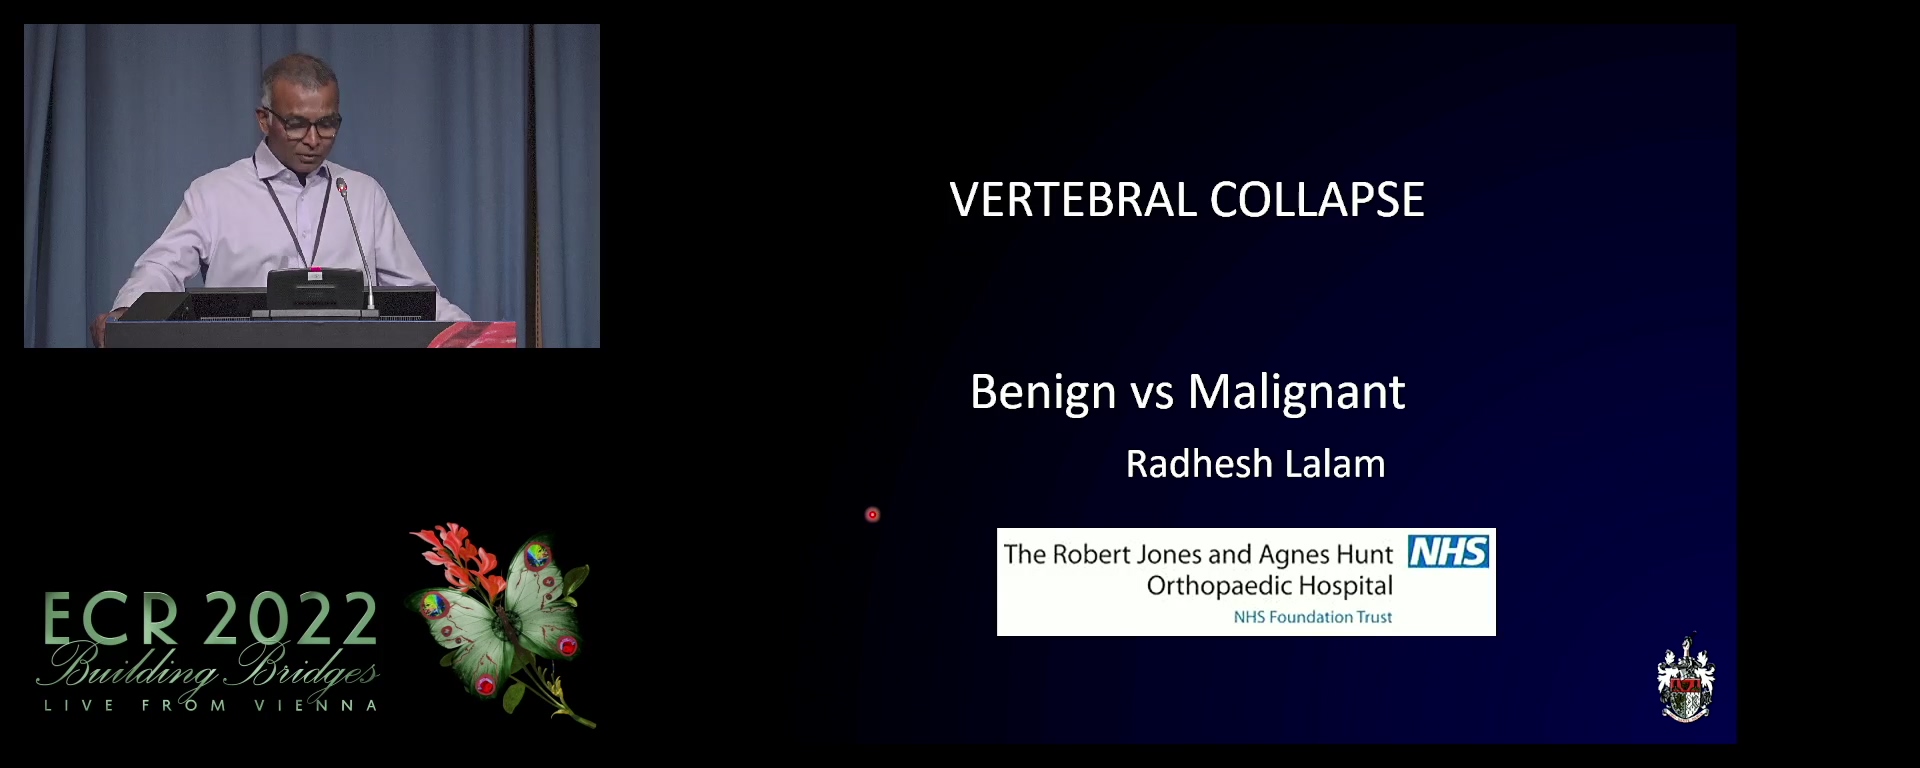 Vertebral body collapse - Radhesh Lalam, Oswestry / UK